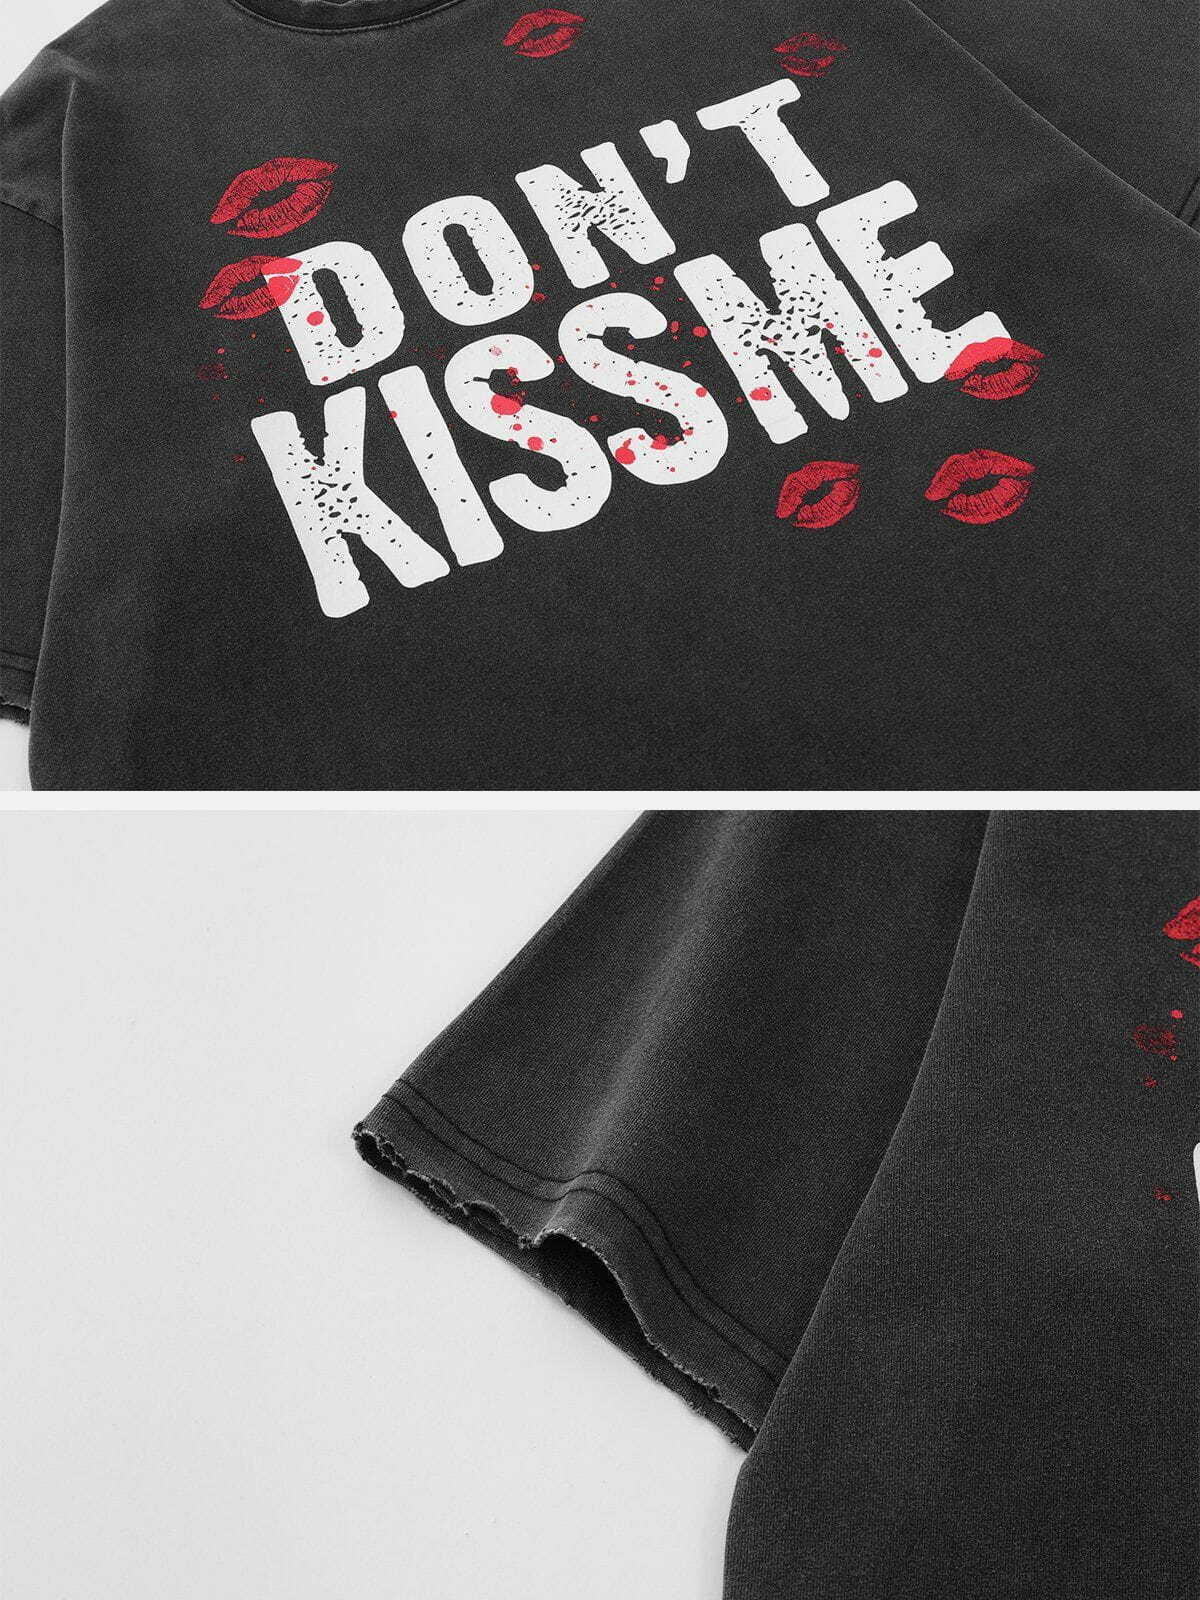 edgy kisses print tee youthful  retro streetwear essential 2905